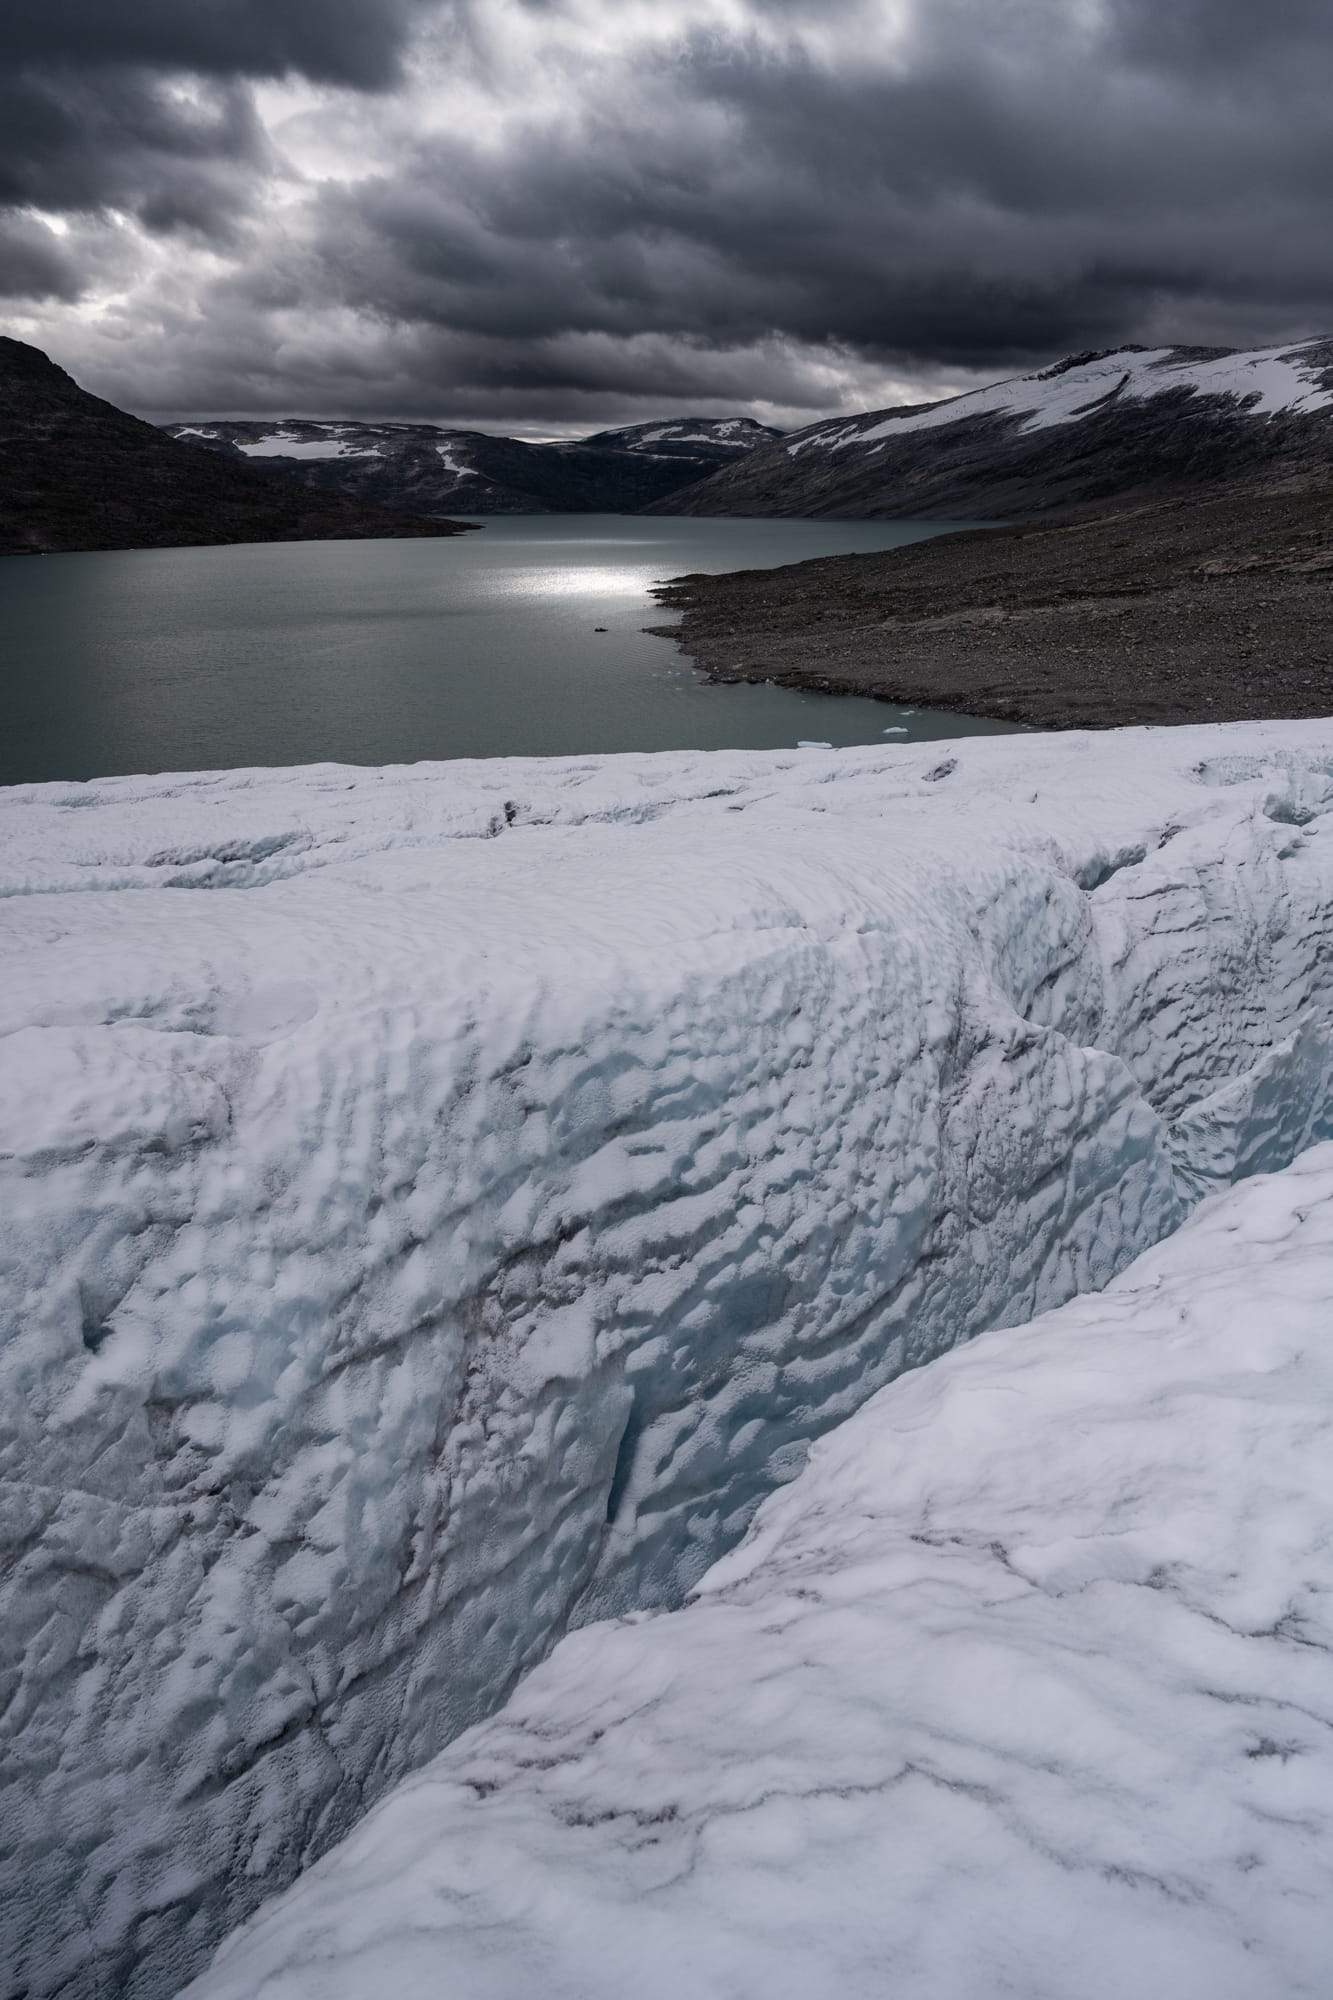 Vue du Styggevatnet depuis le glacier de jostedalsbreen